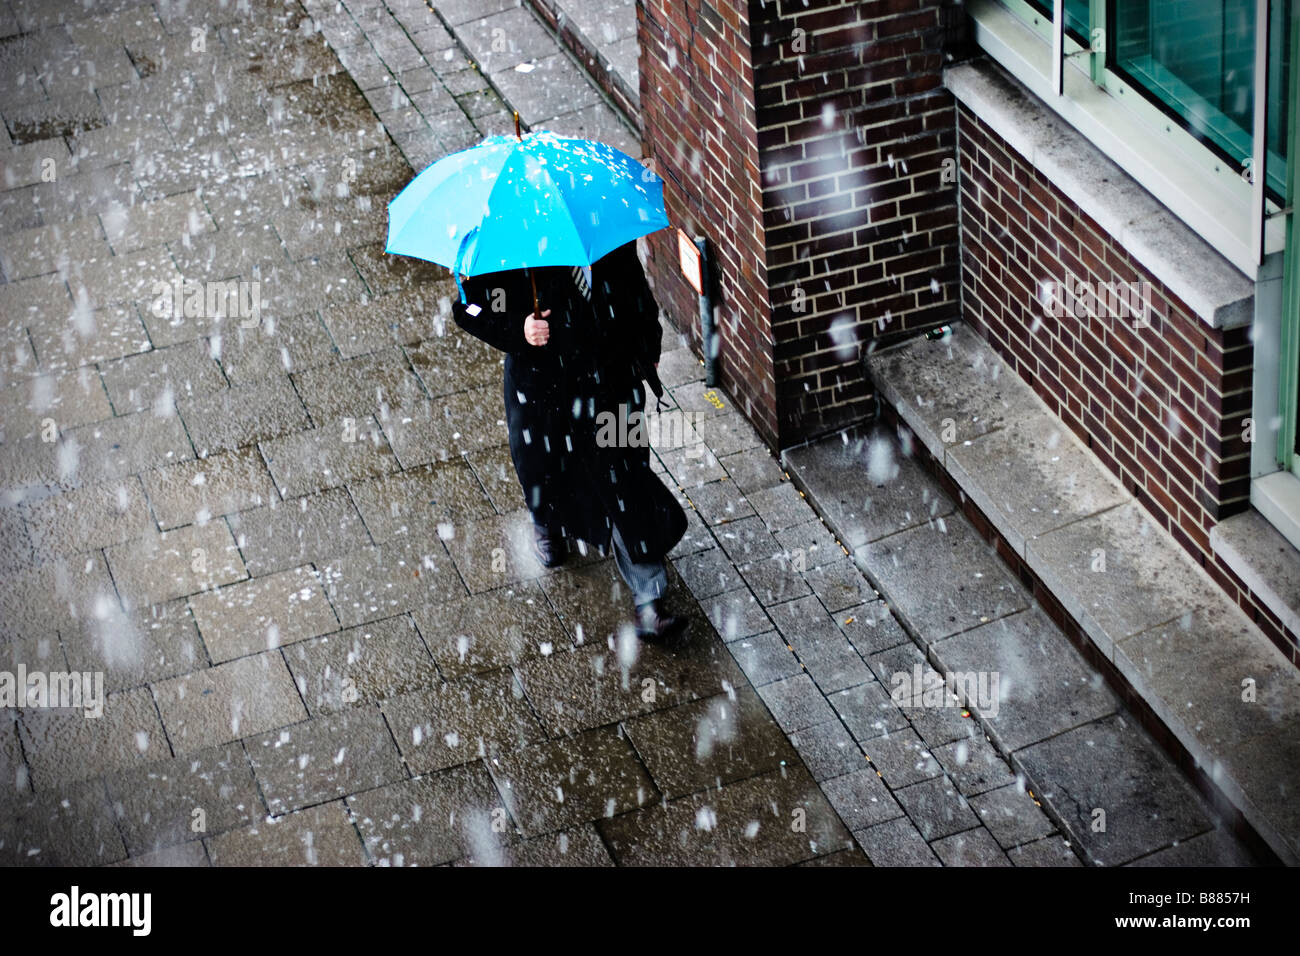 Man with umbrella and coat walks in snow covered Hamburg, Germany Stock Photo